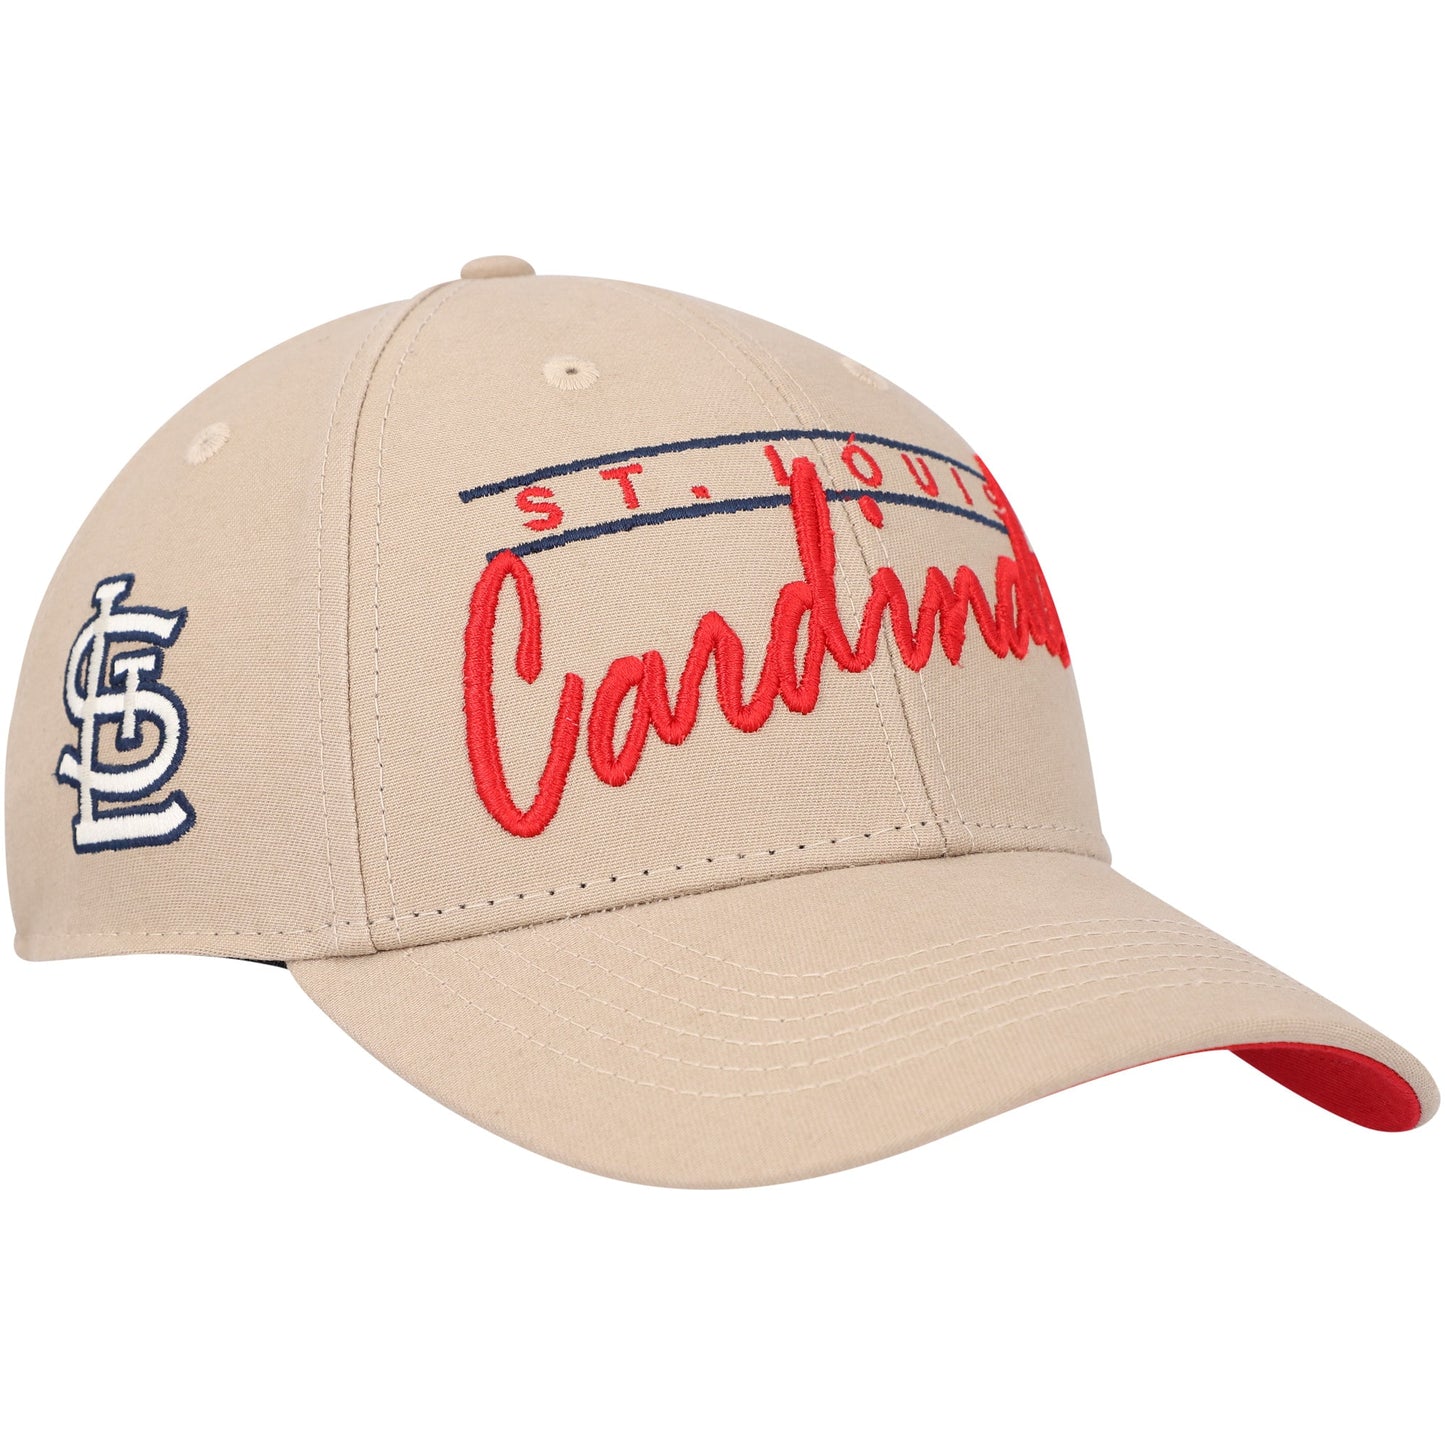 St. Louis Cardinals '47 Atwood MVP Adjustable Hat - Khaki